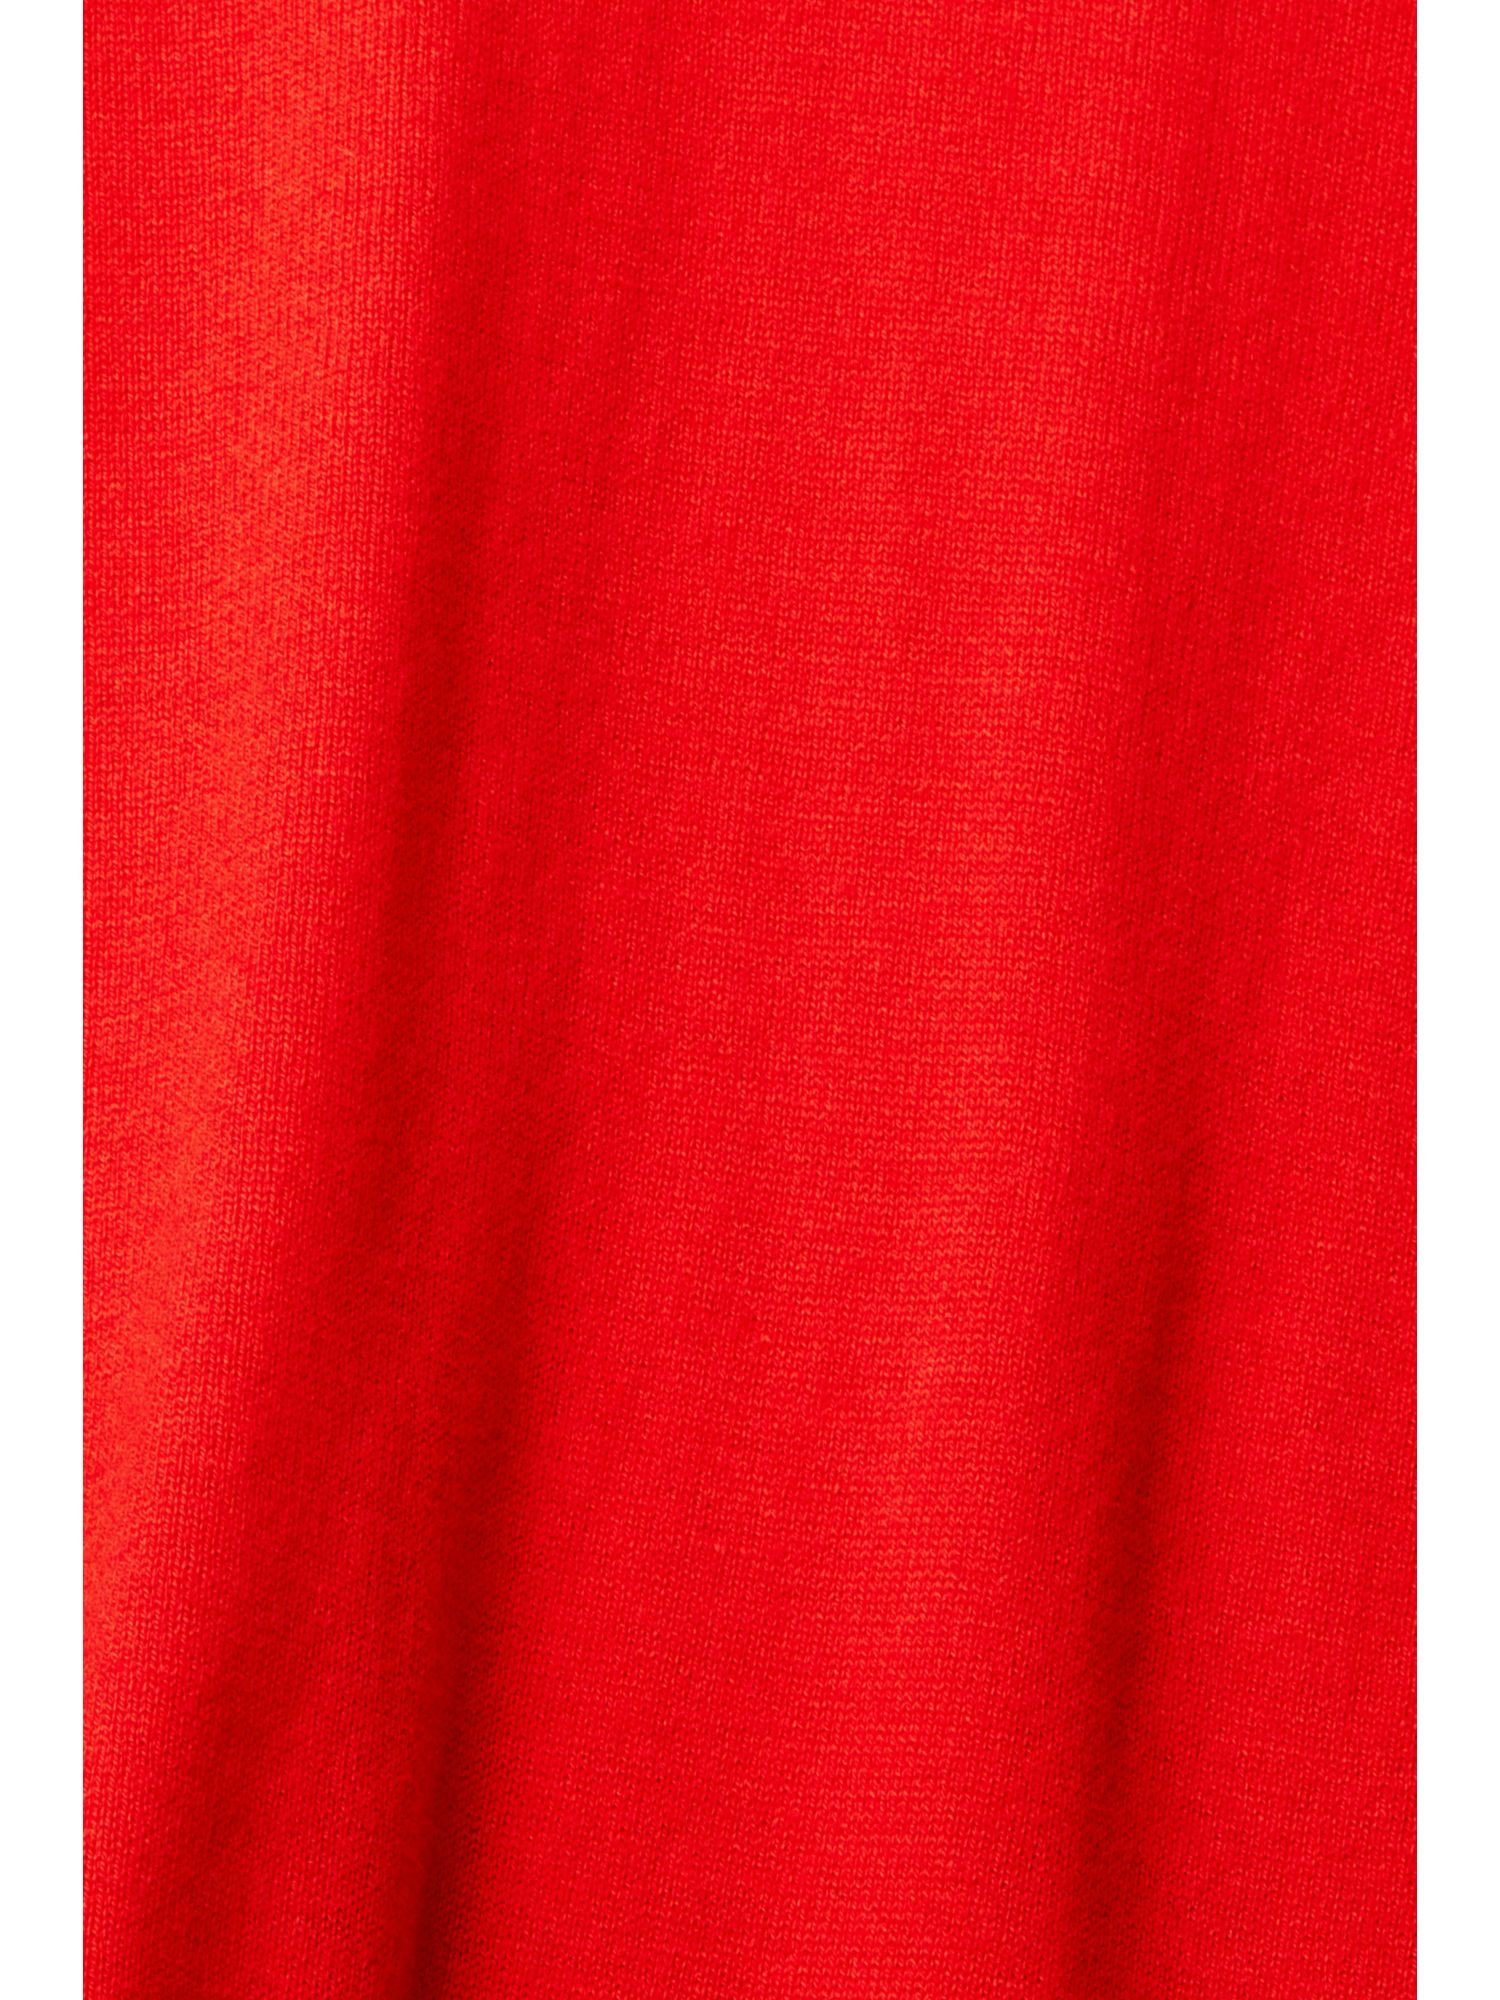 RED V-Neck-Pullover,-Baumwoll-Mix Basic edc Esprit V-Ausschnitt-Pullover by